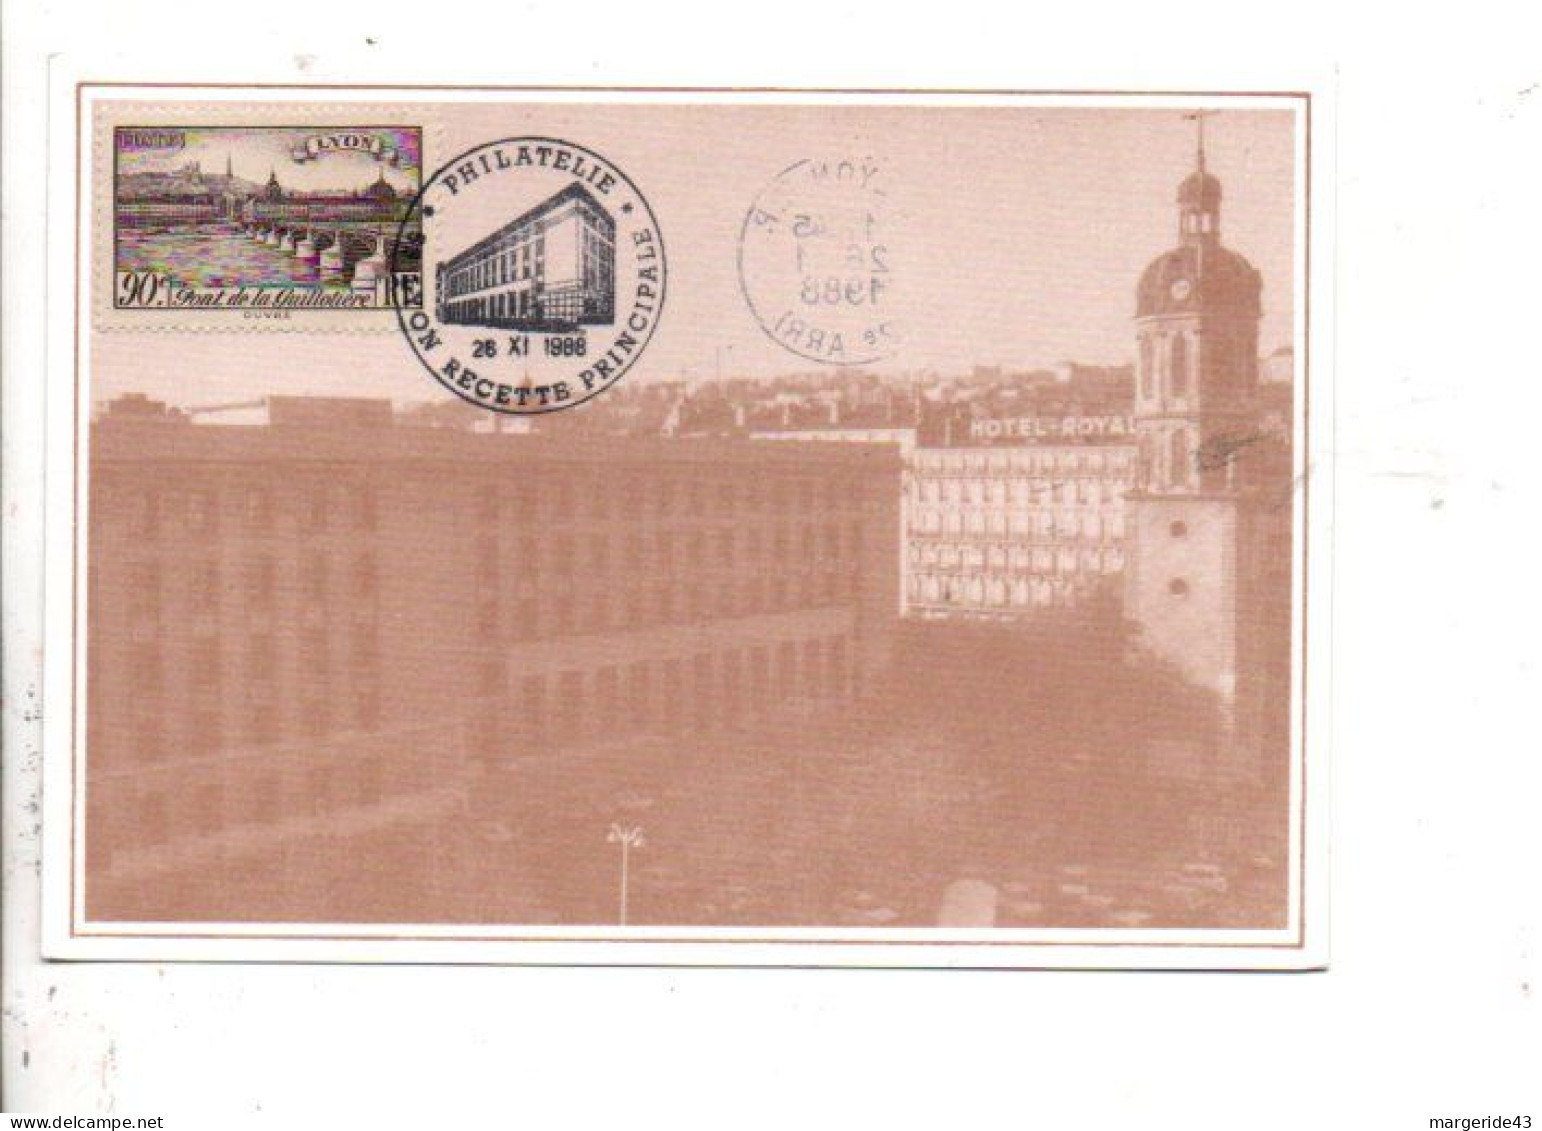 PHILATELIE LYON RECETTE PRINCIPALE 1988 - Commemorative Postmarks